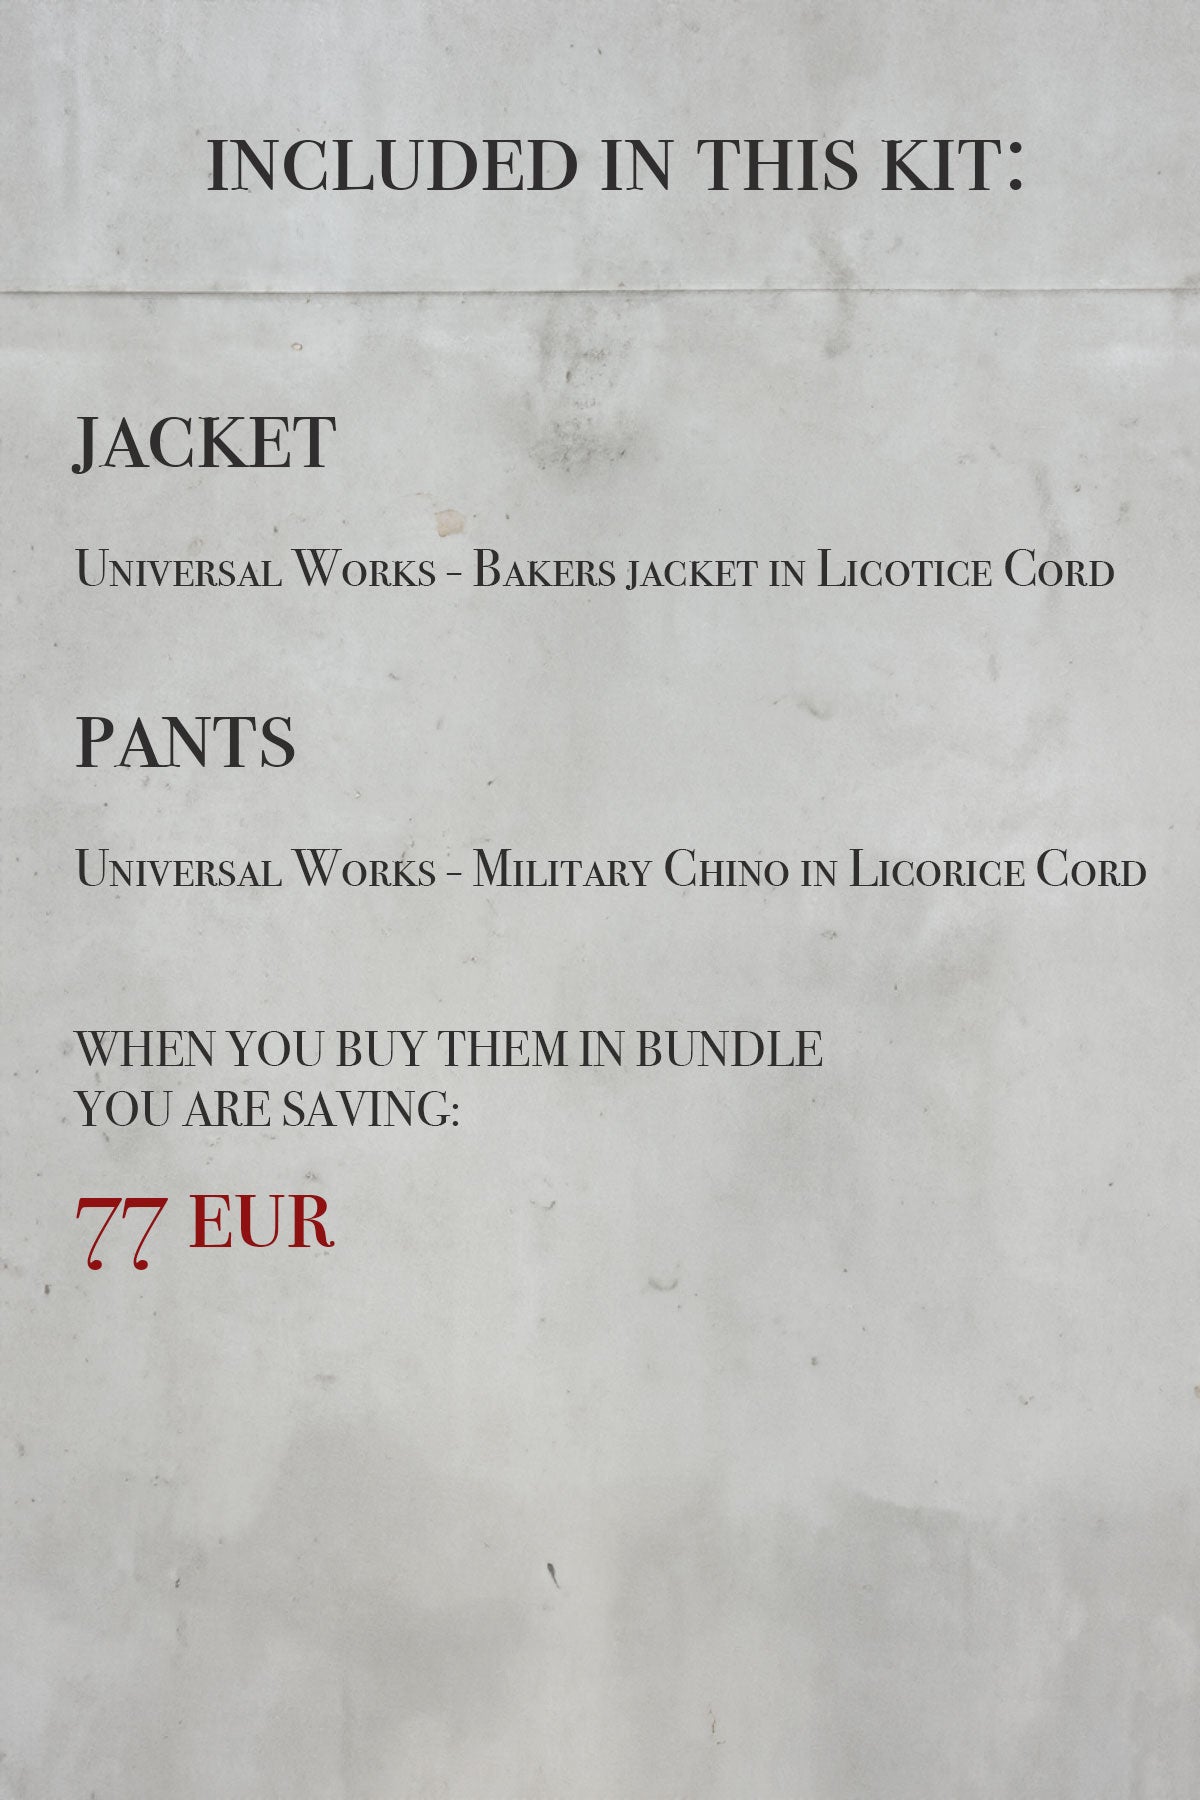 Universal Works Licorice Cord Kit (Jacket + Pants)